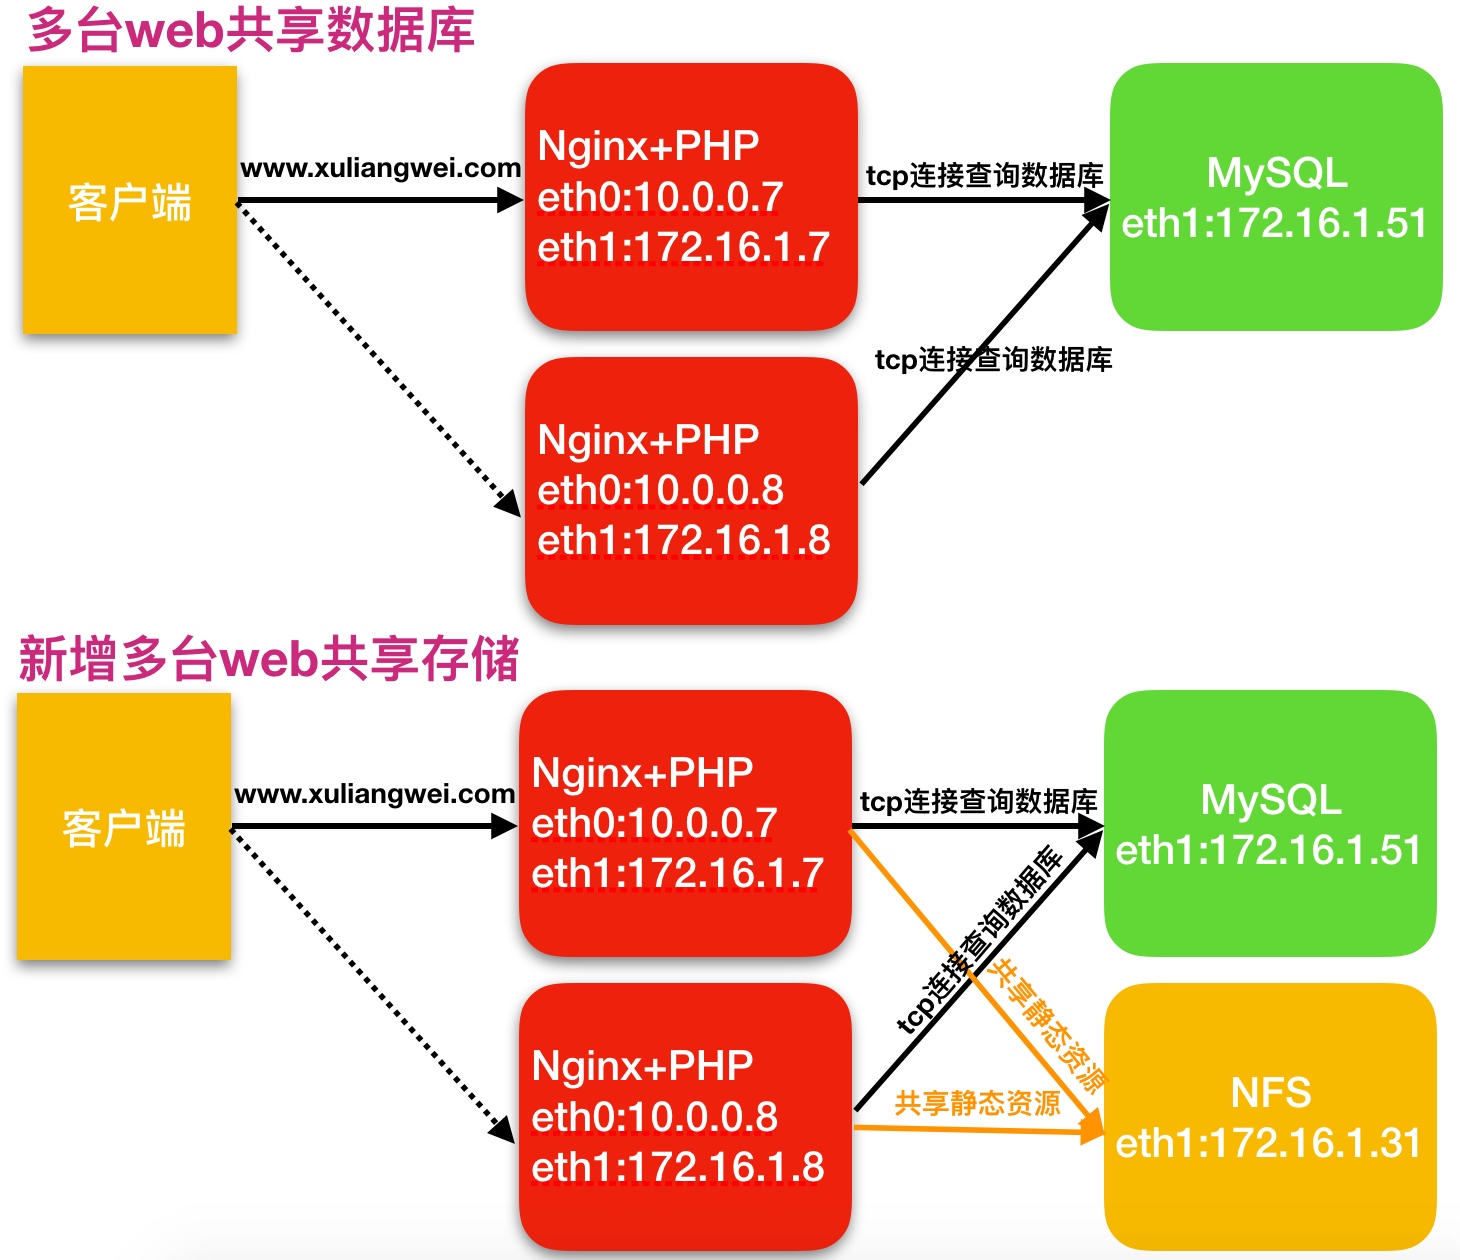 04.Nginx搭建流行架构 - 图20